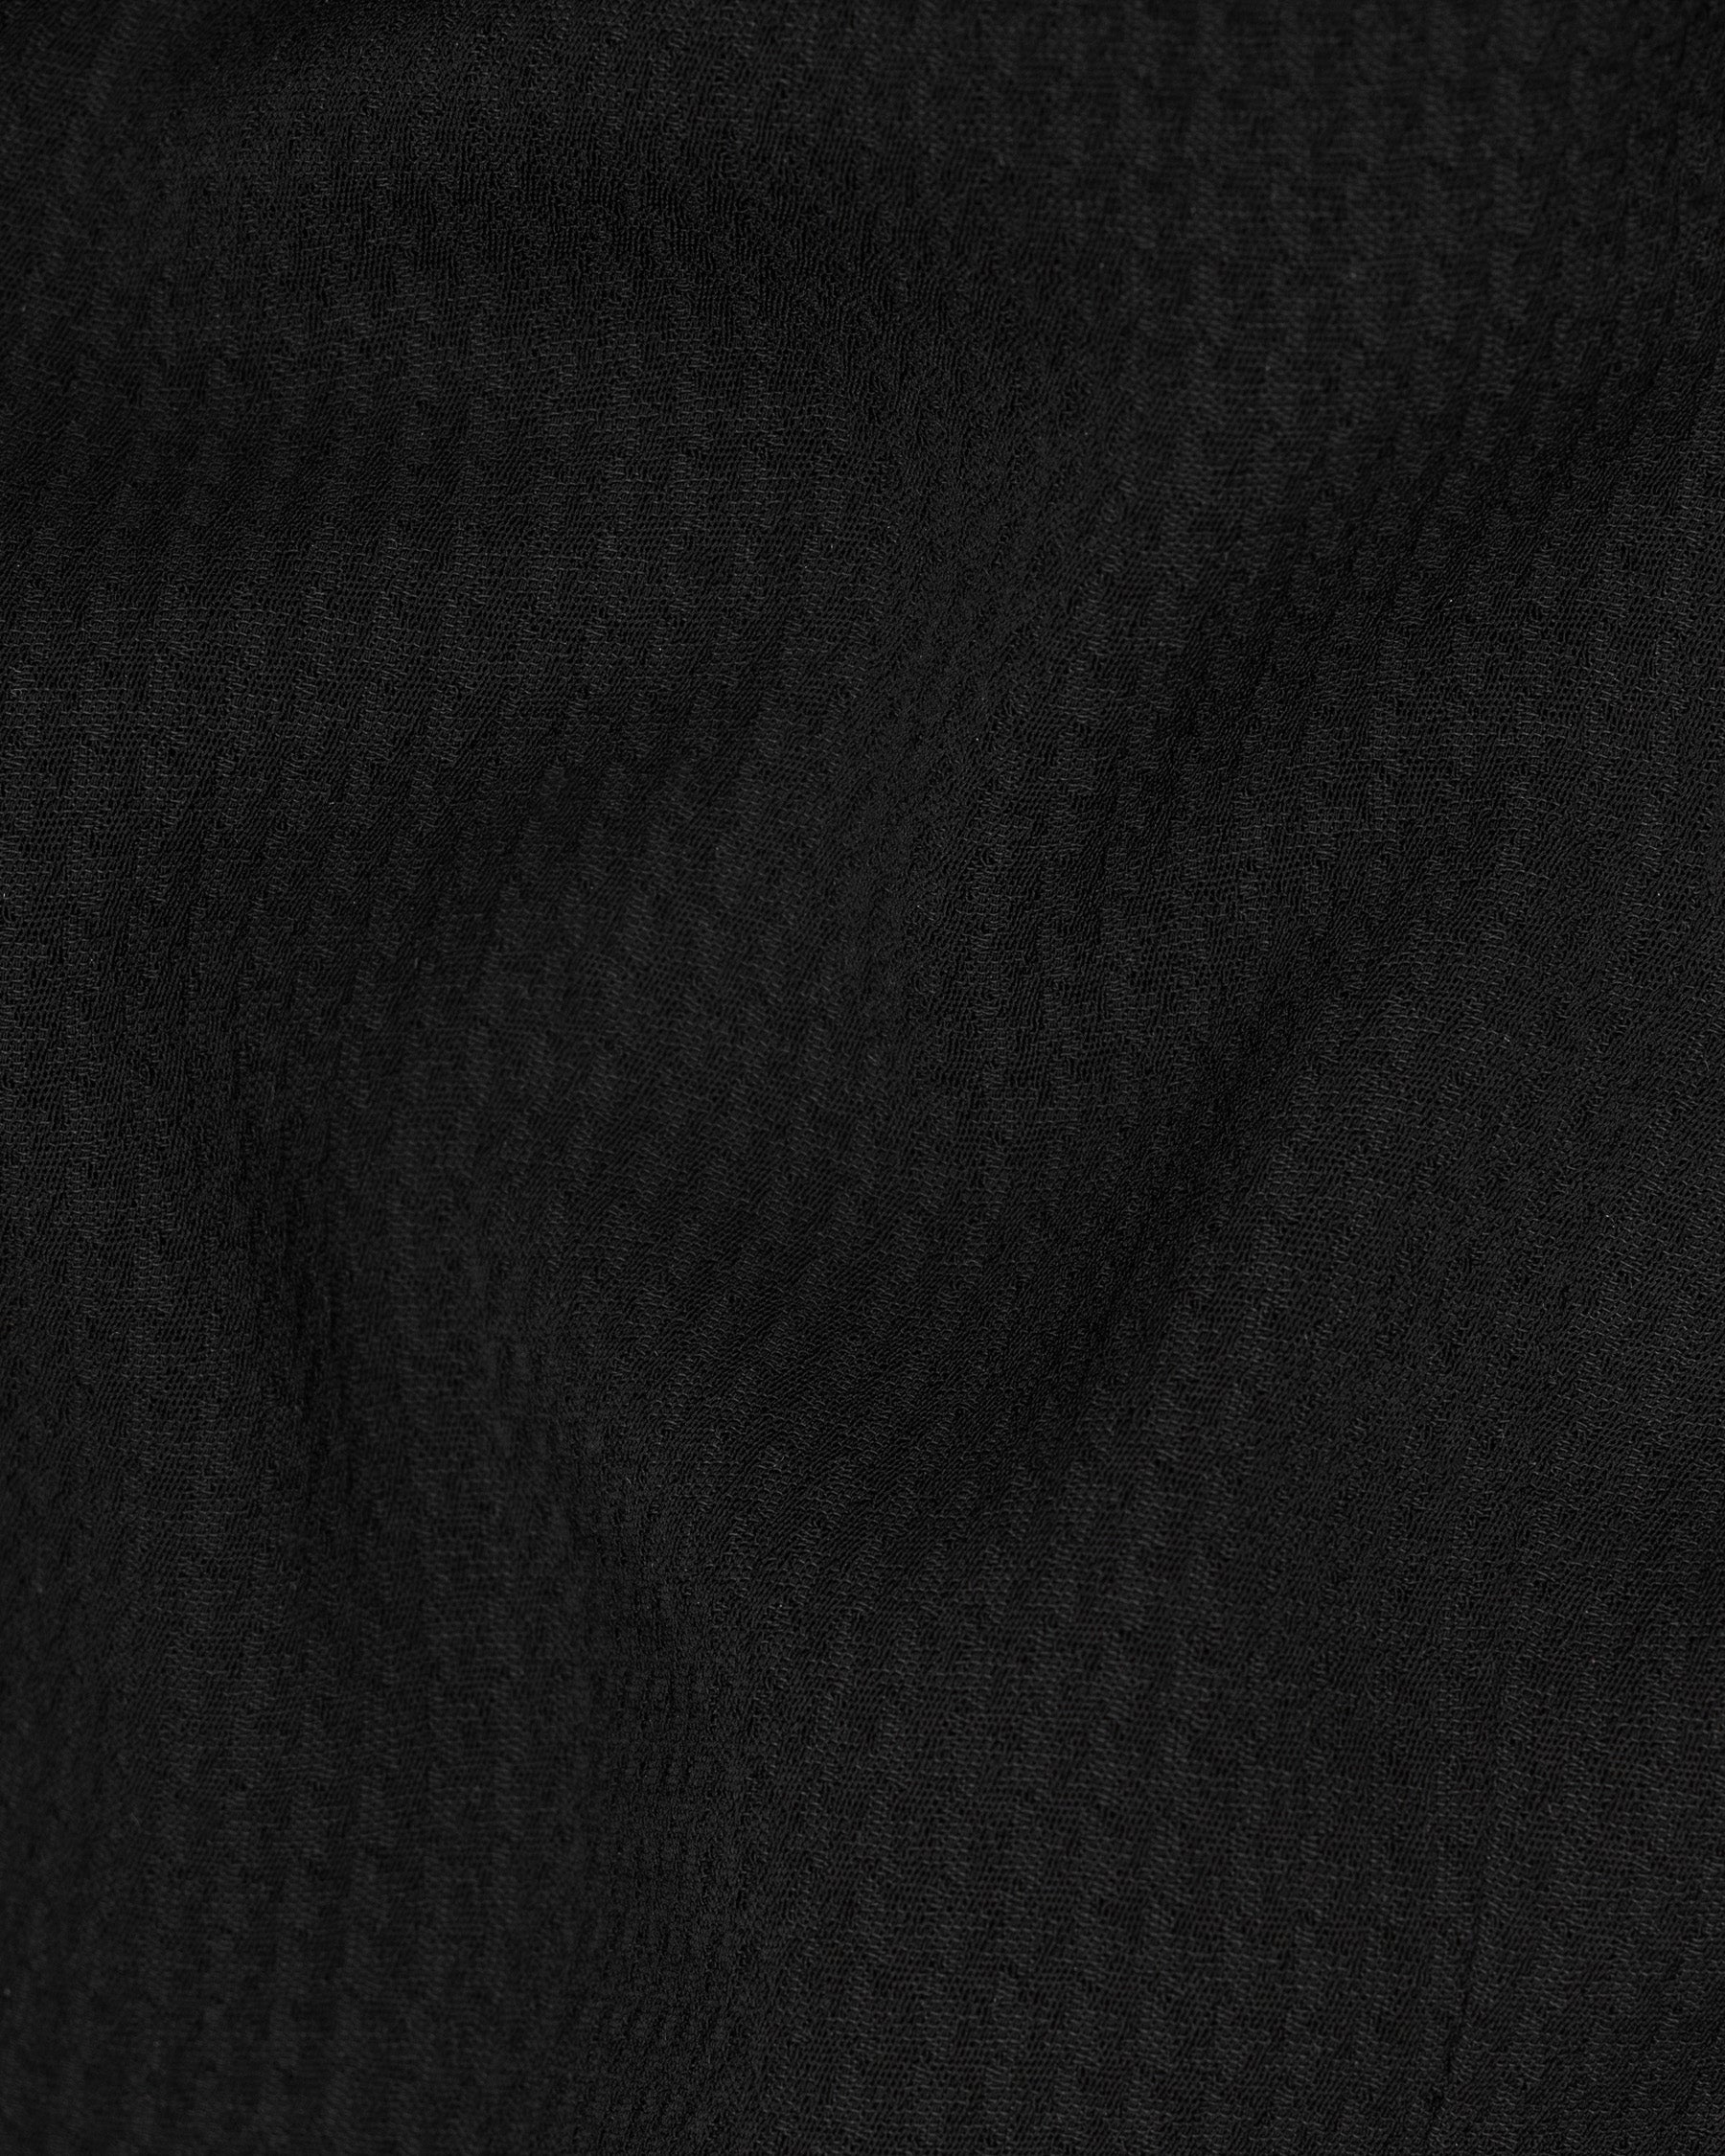 Smoky Black Super Soft Nehru Jacket WC1641-36, WC1641-38, WC1641-40, WC1641-42, WC1641-44, WC1641-46, WC1641-48, WC1641-50, WC1641-52, WC1641-54, WC1641-56, WC1641-58, WC1641-60